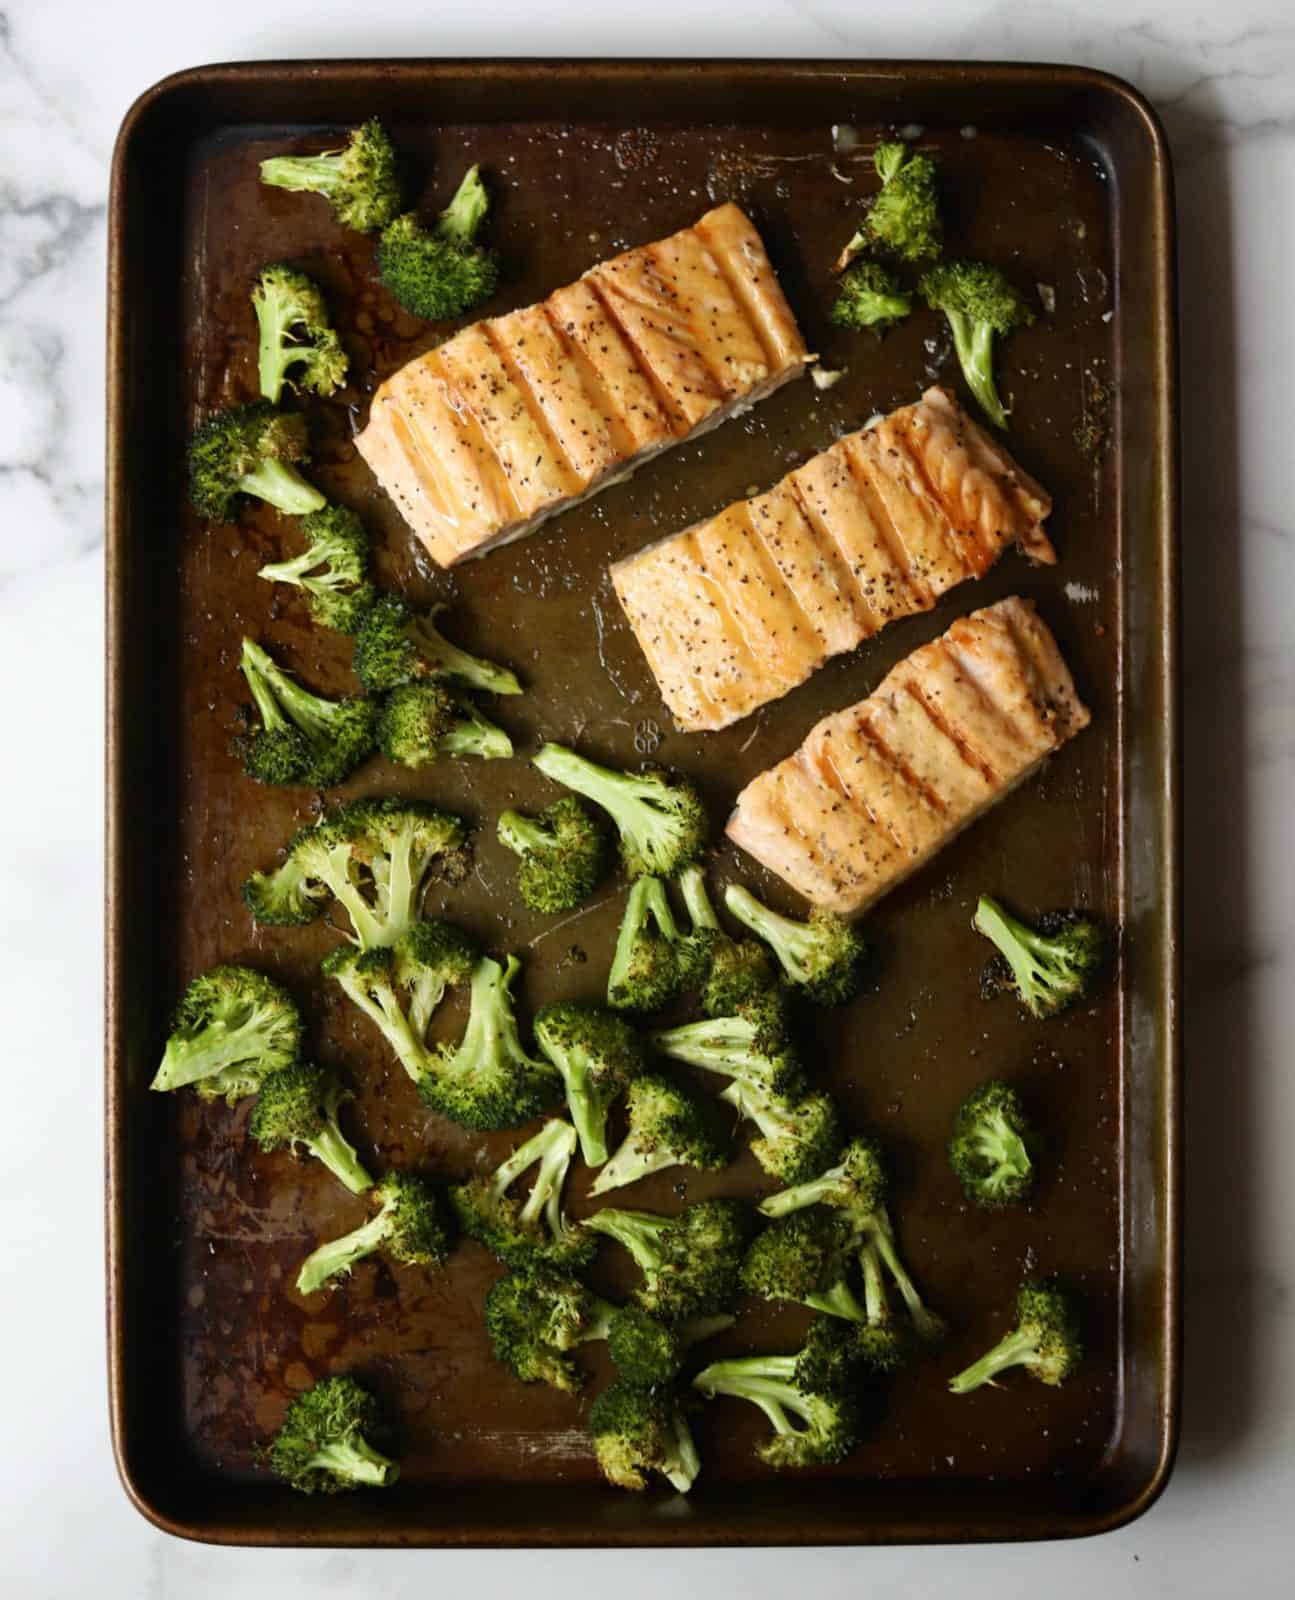 Roasted salmon and broccoli on a sheet pan